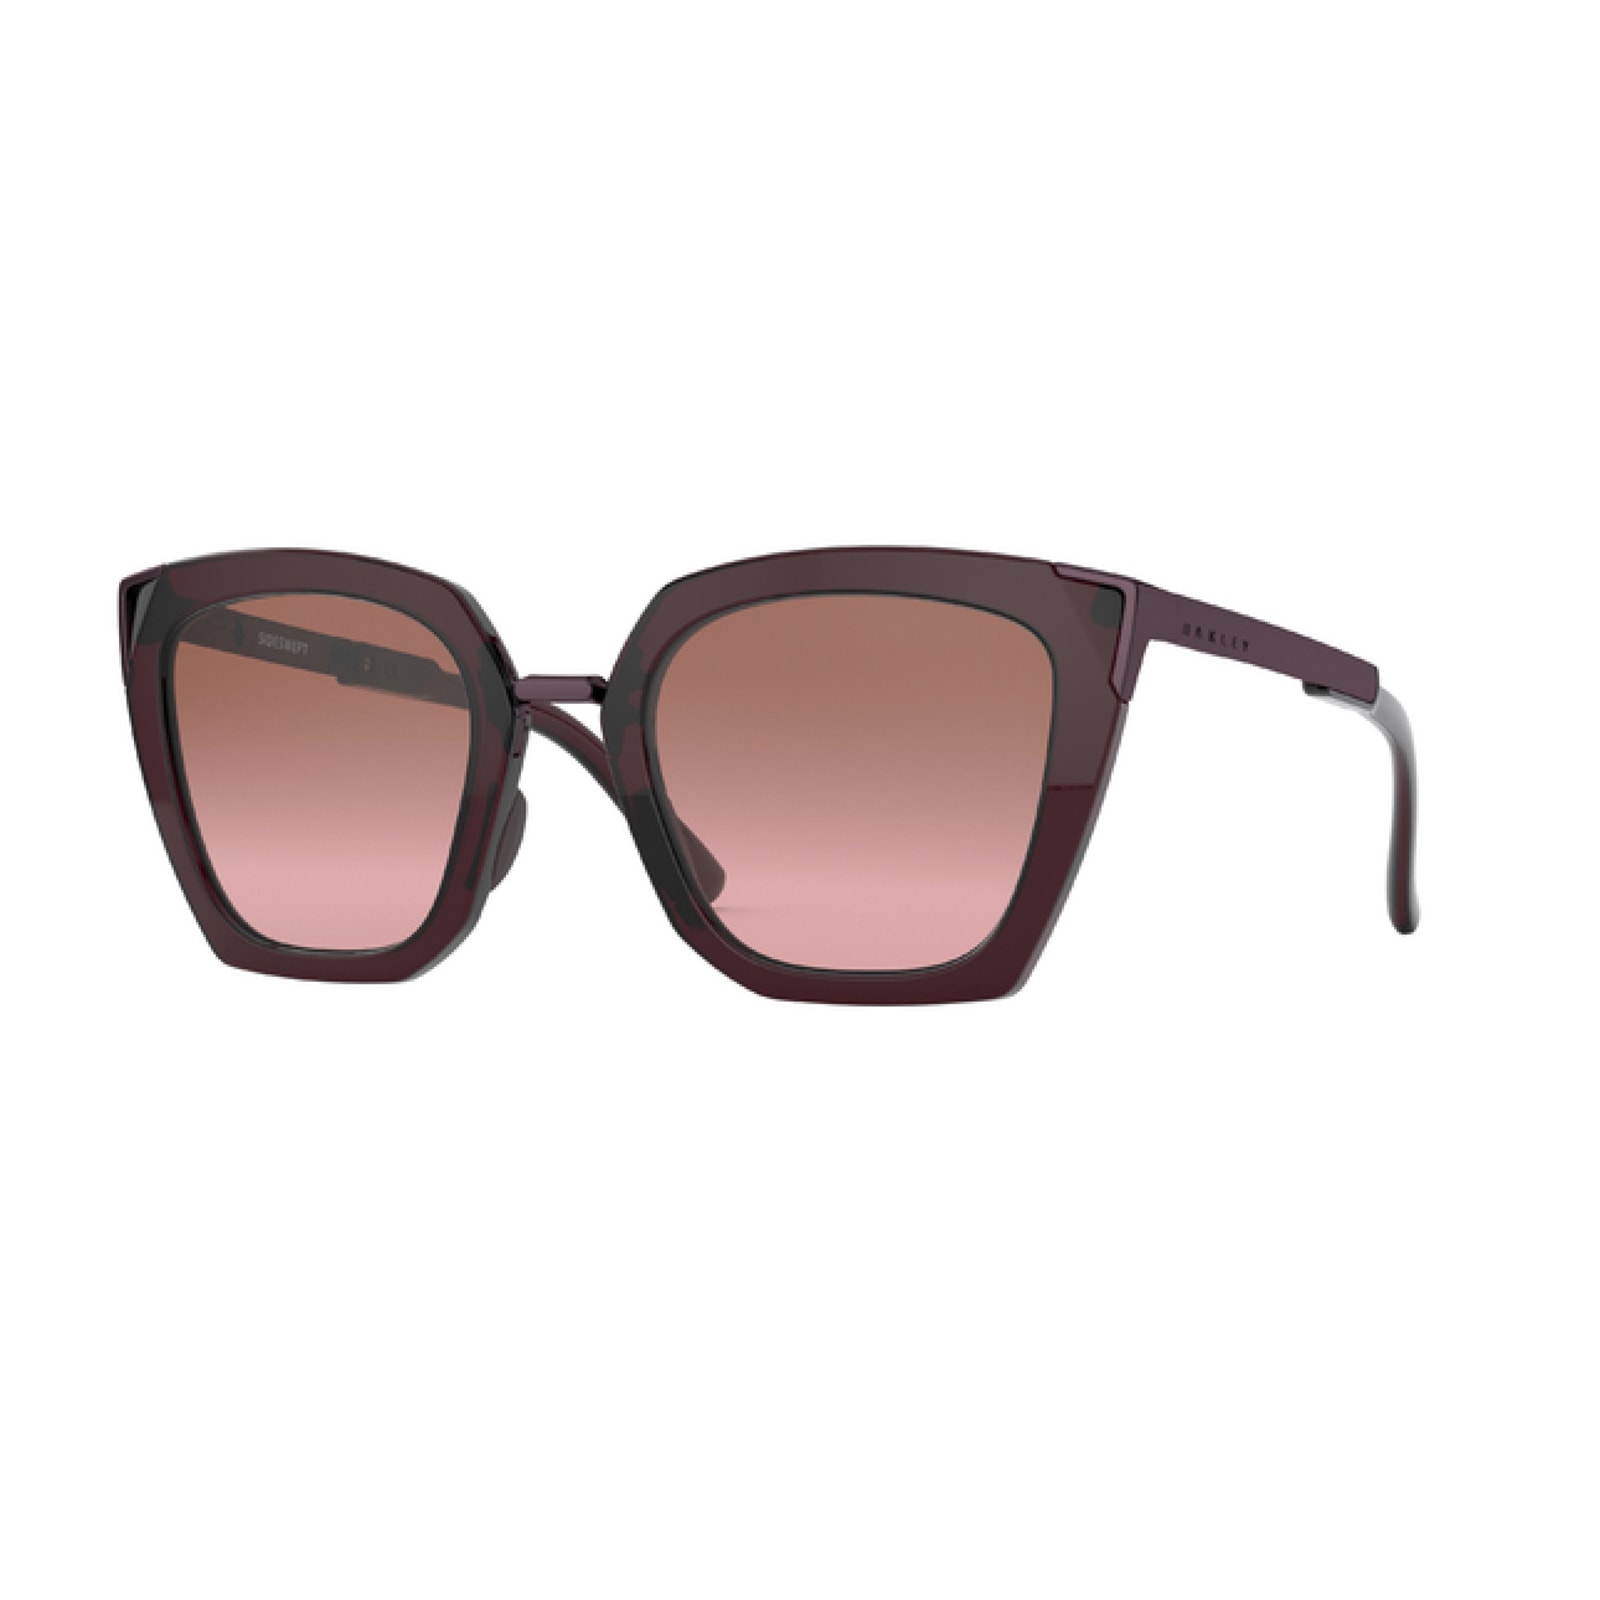 Adult Side Swept Crystal Raspberry Sunglasses w/ G40 Black Gradient Lenses  by Oakley at Fleet Farm